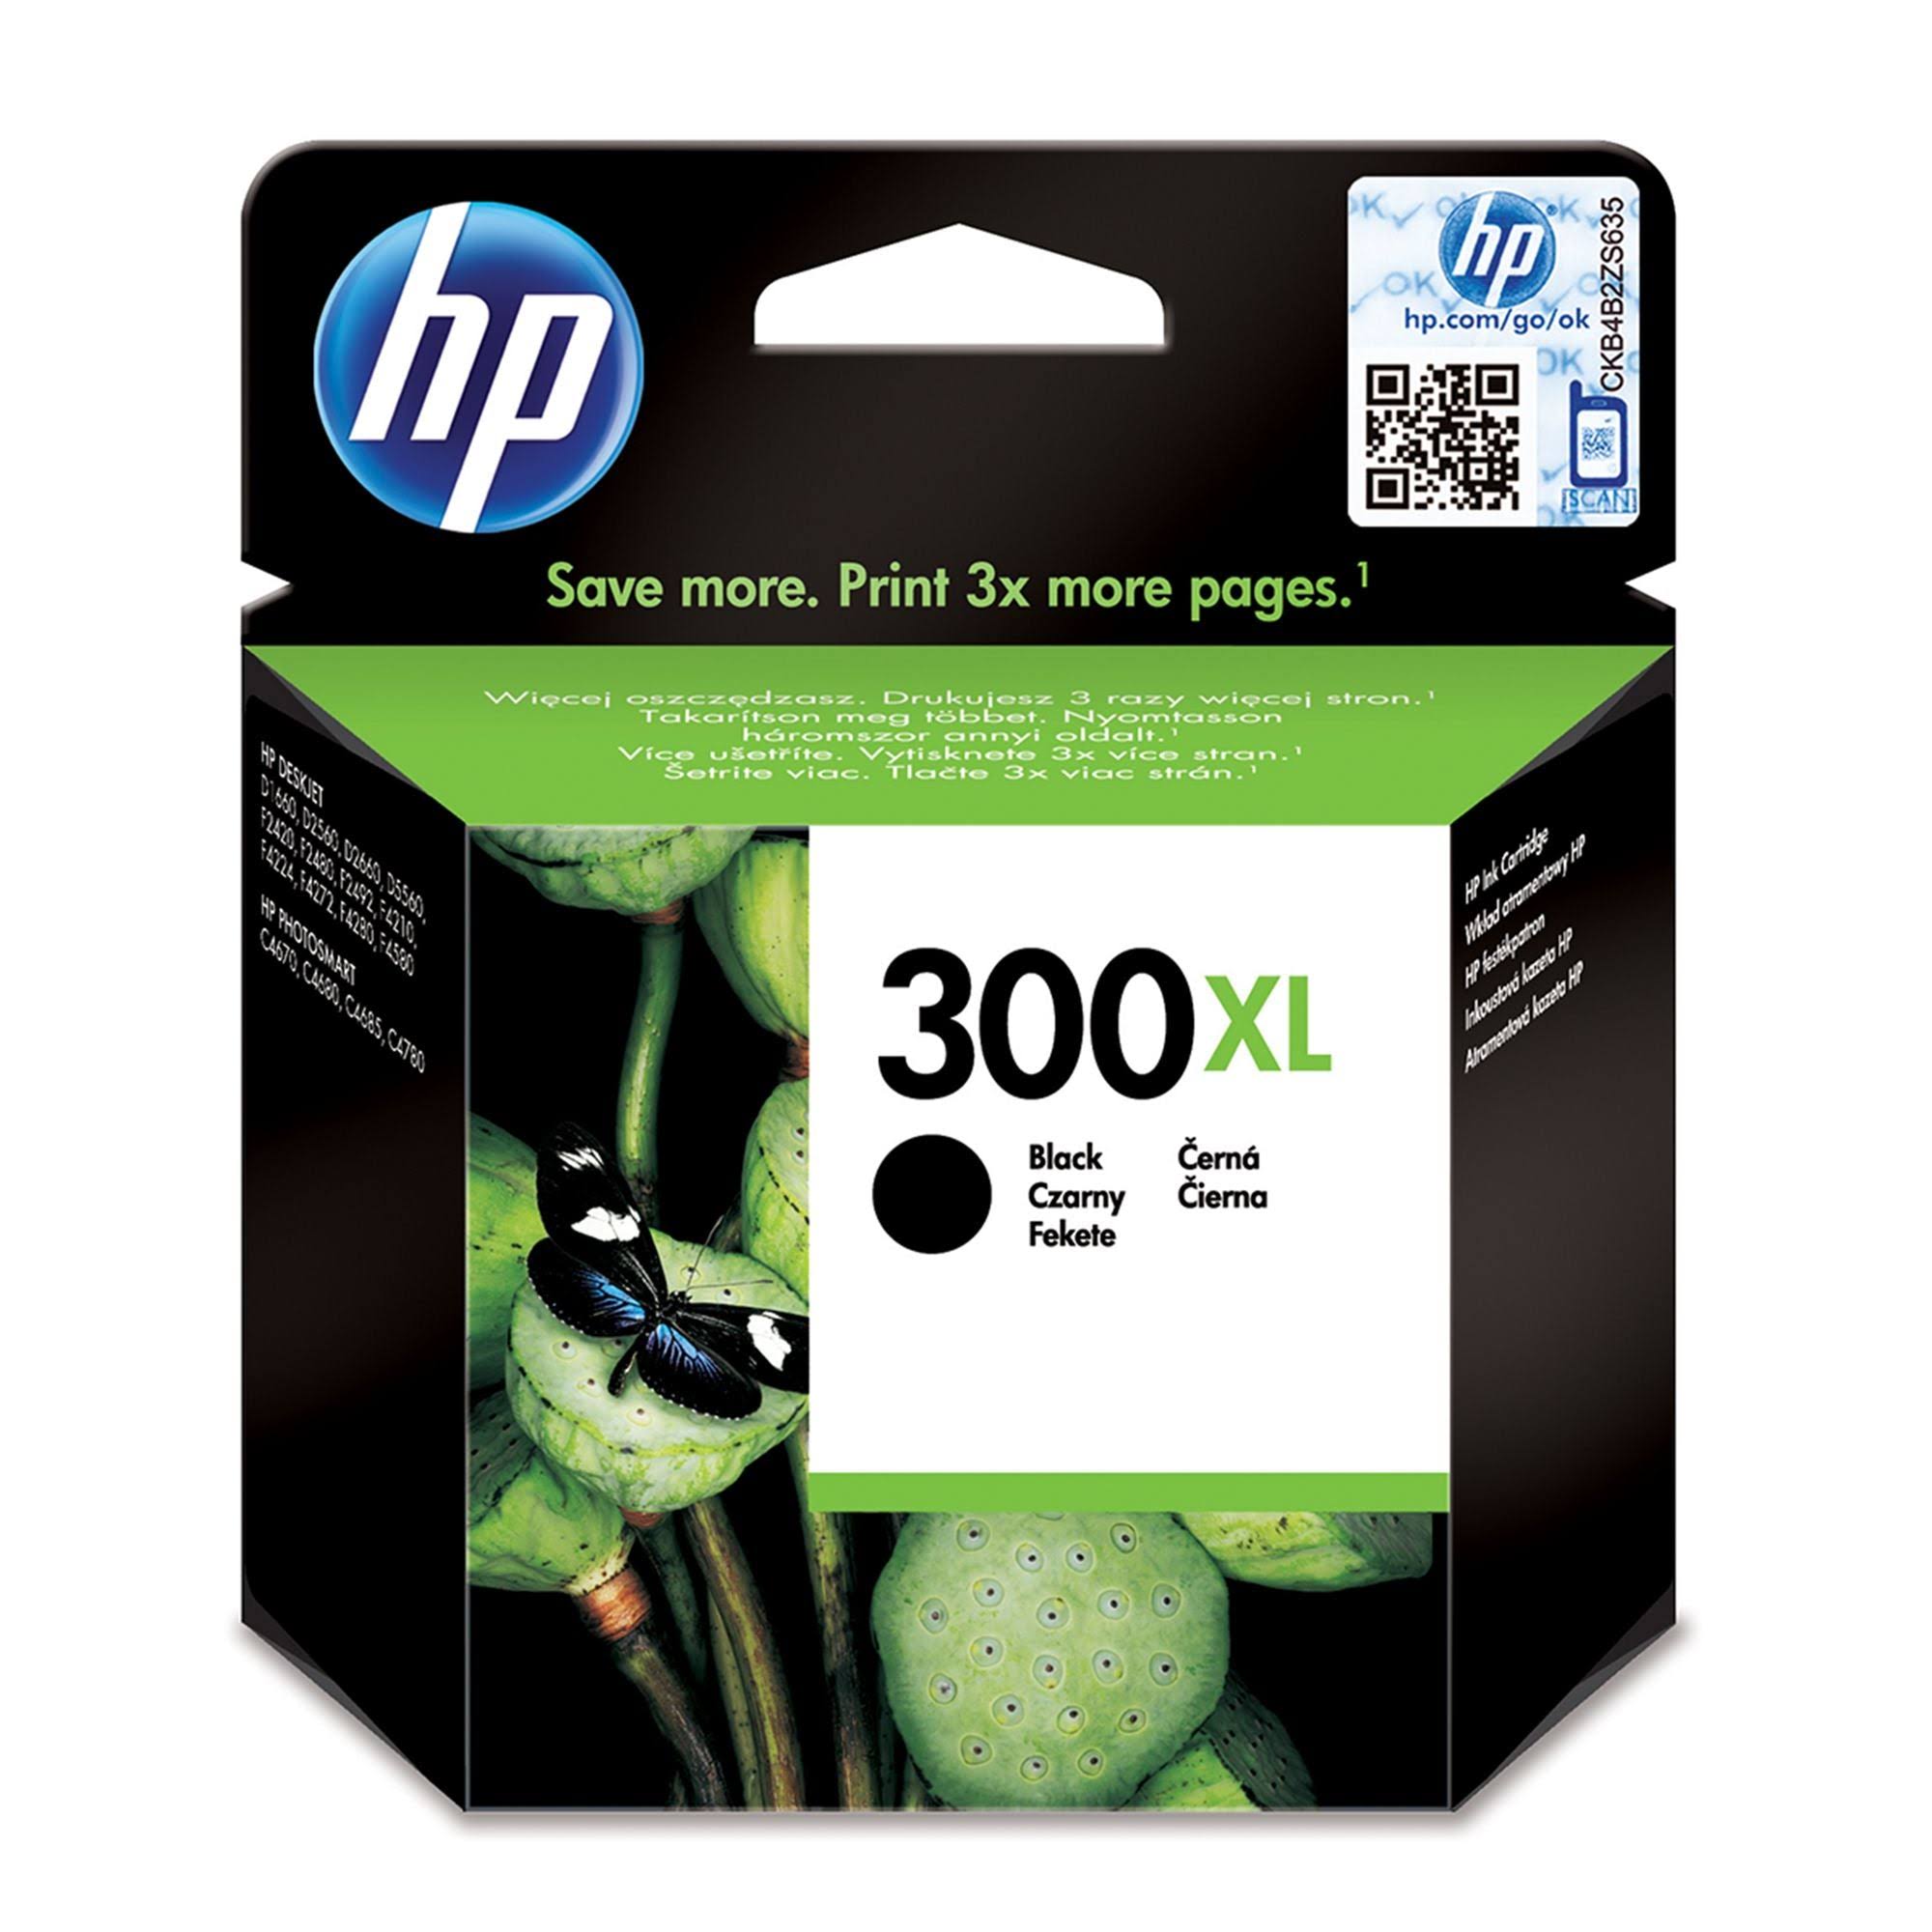 HP 300XL Printer Ink Cartridge - Black